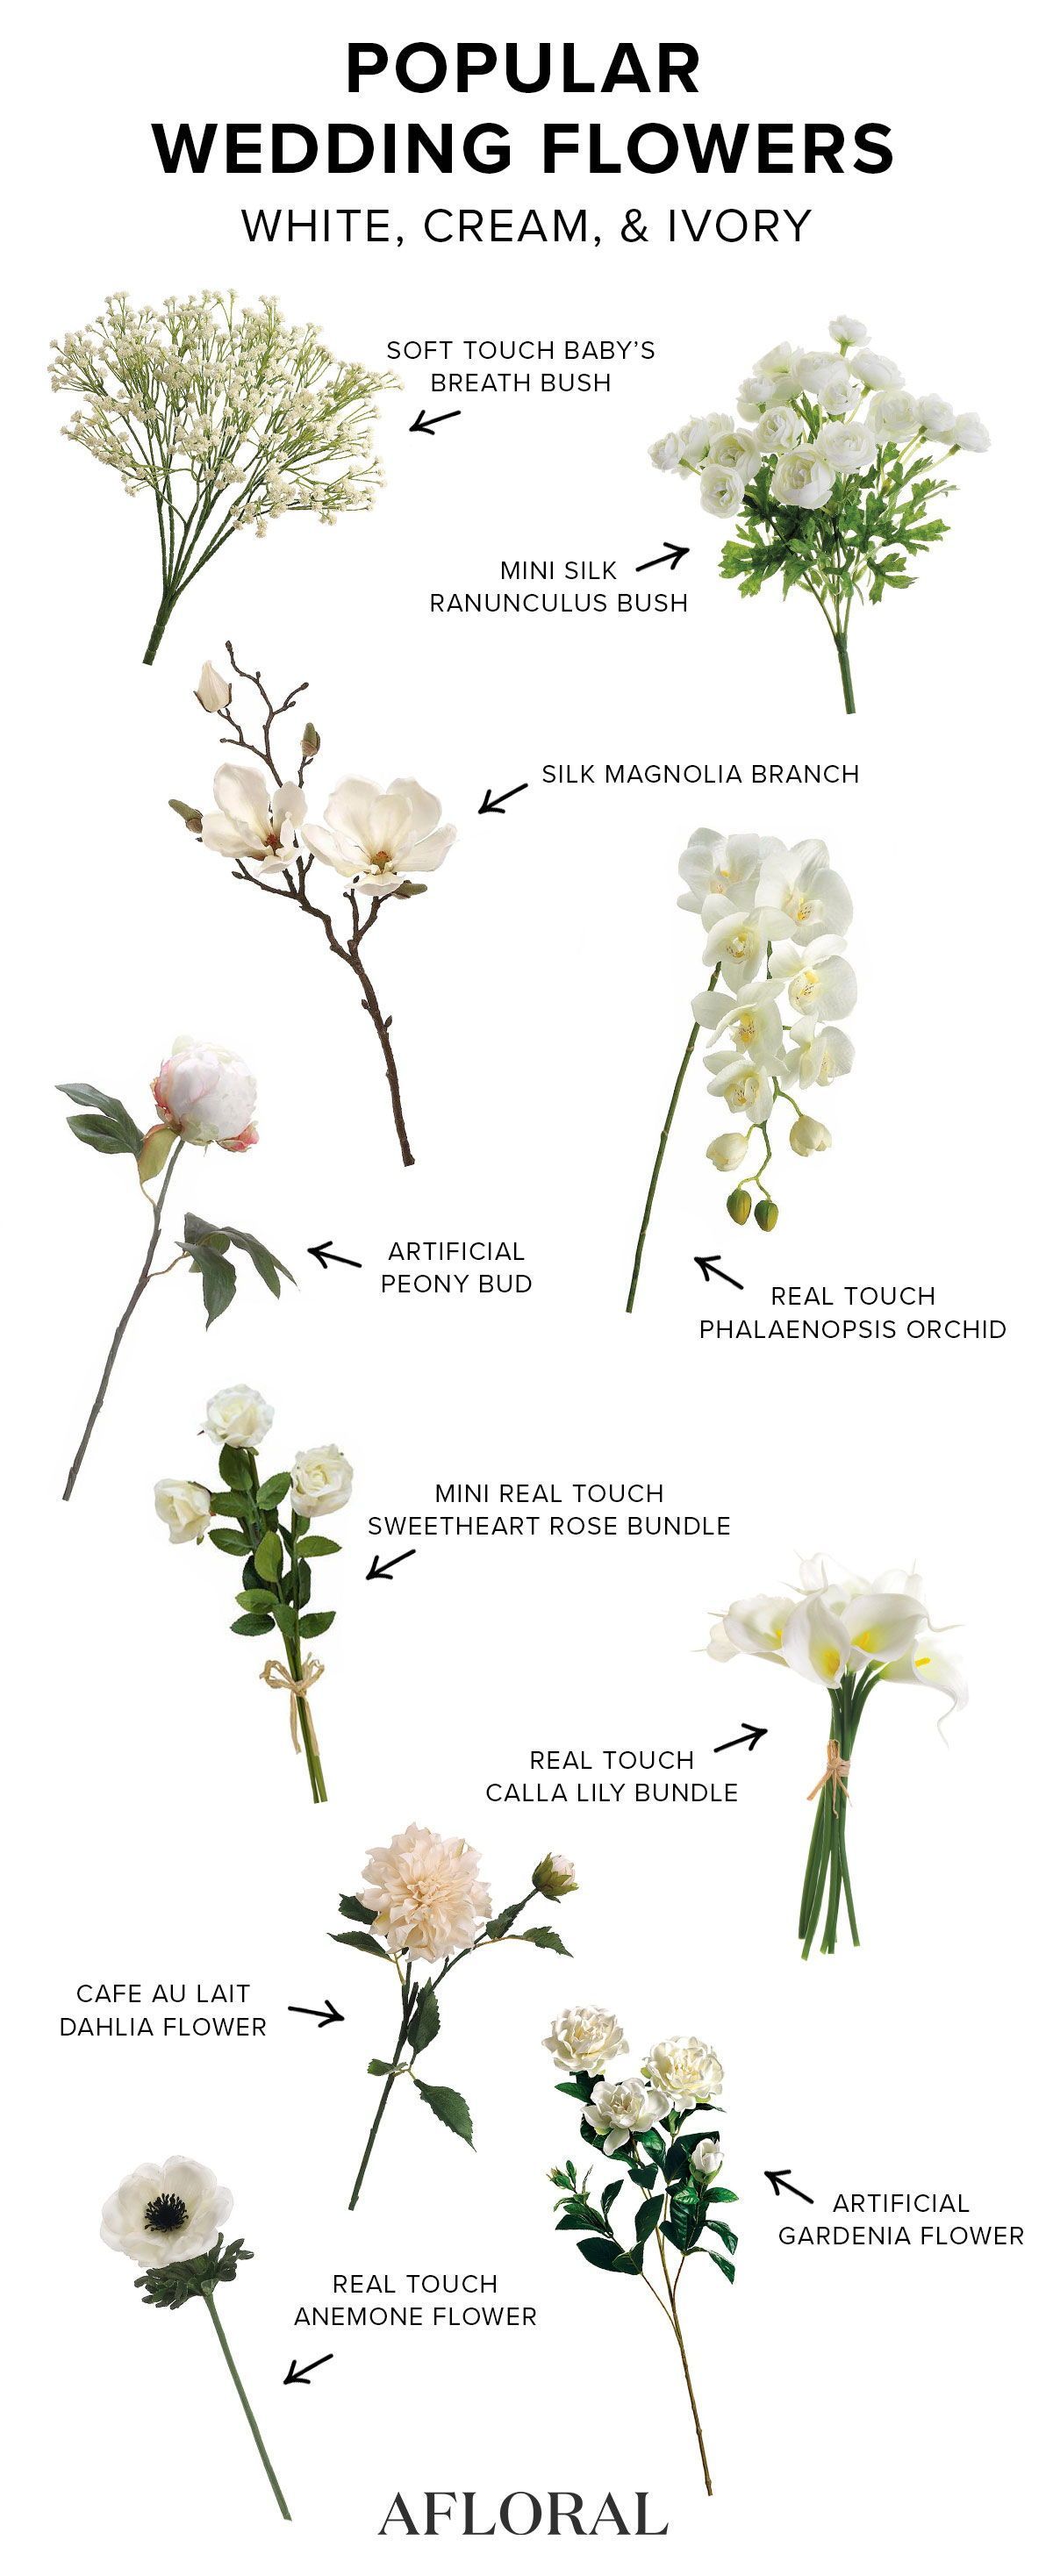 White Artificial Flowers | Silk Wedding Flowers | Afloral.com - White Artificial Flowers | Silk Wedding Flowers | Afloral.com -   19 diy Wedding flowers ideas